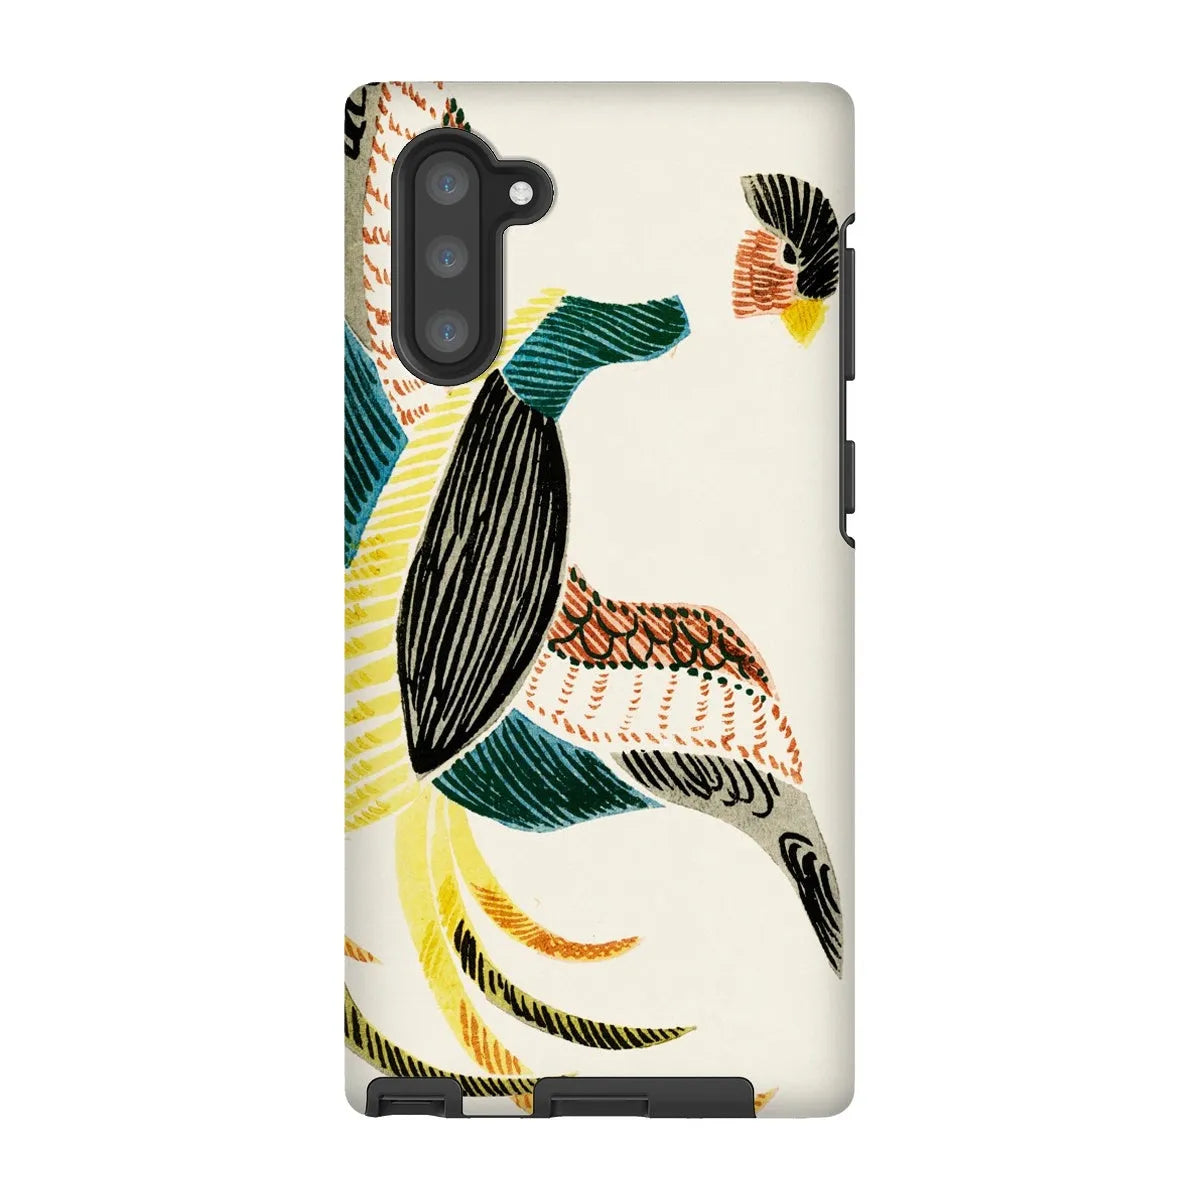 Woodblock Crane - Japanese Bird Phone Case - Taguchi Tomoki - Samsung Galaxy Note 10 / Matte - Mobile Phone Cases